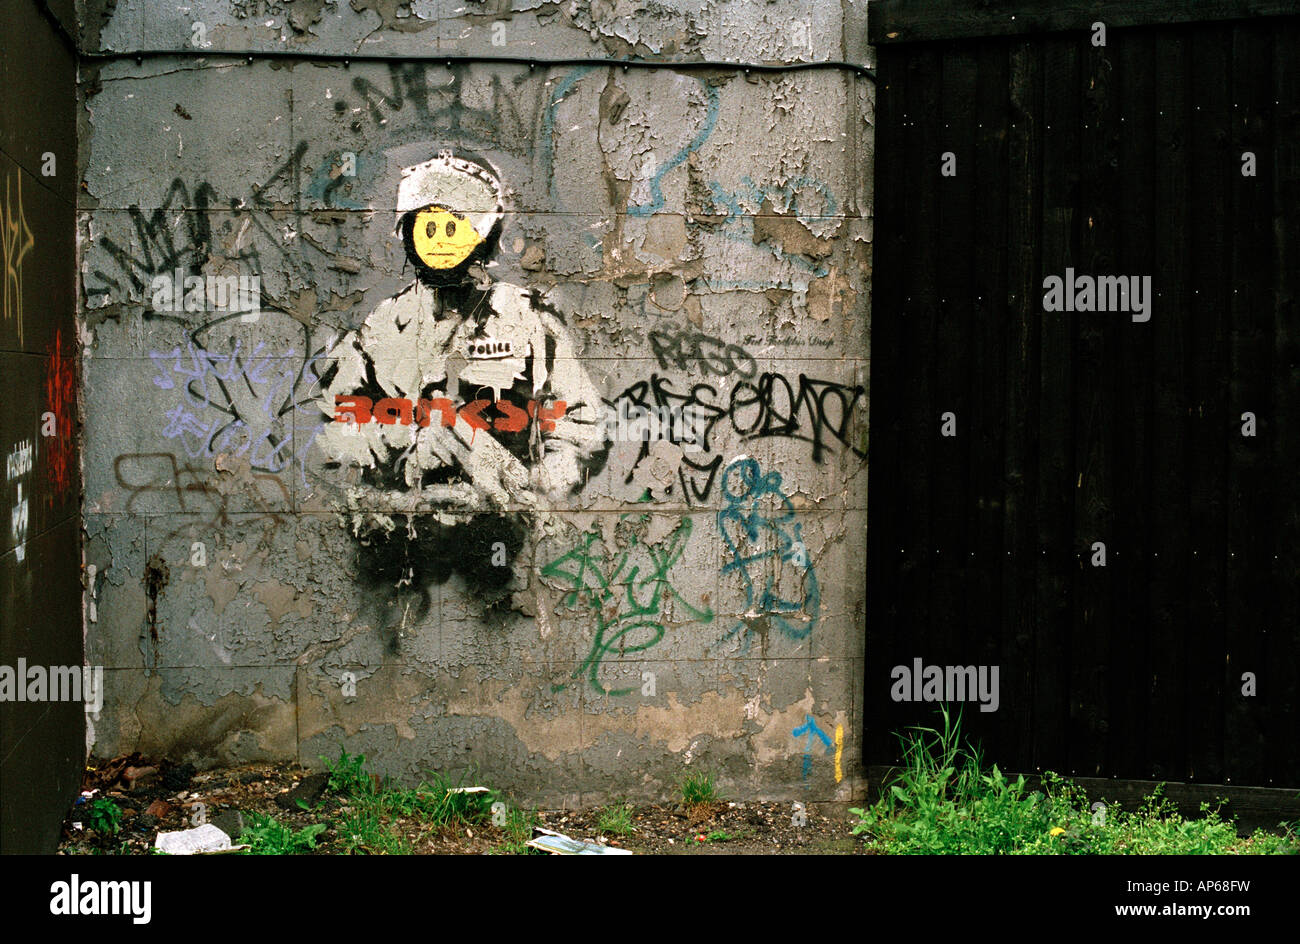 graffiti stencil street art Stock Photo - Alamy